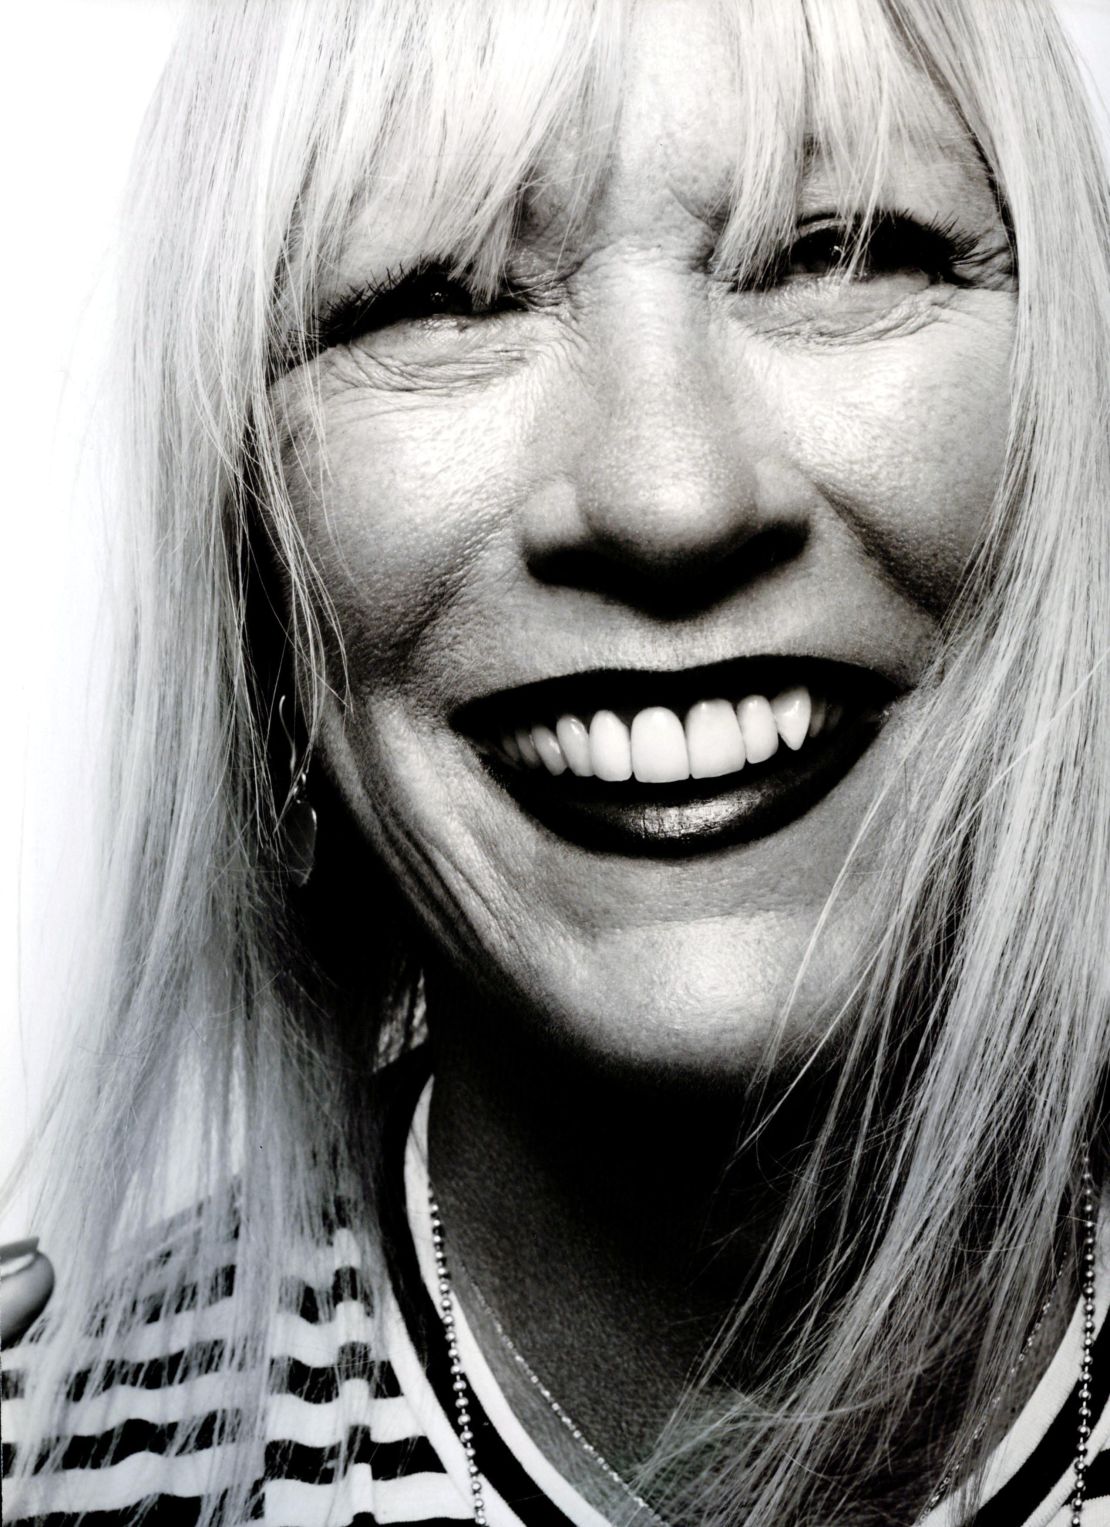 Carole White, founder of Premier Model Management